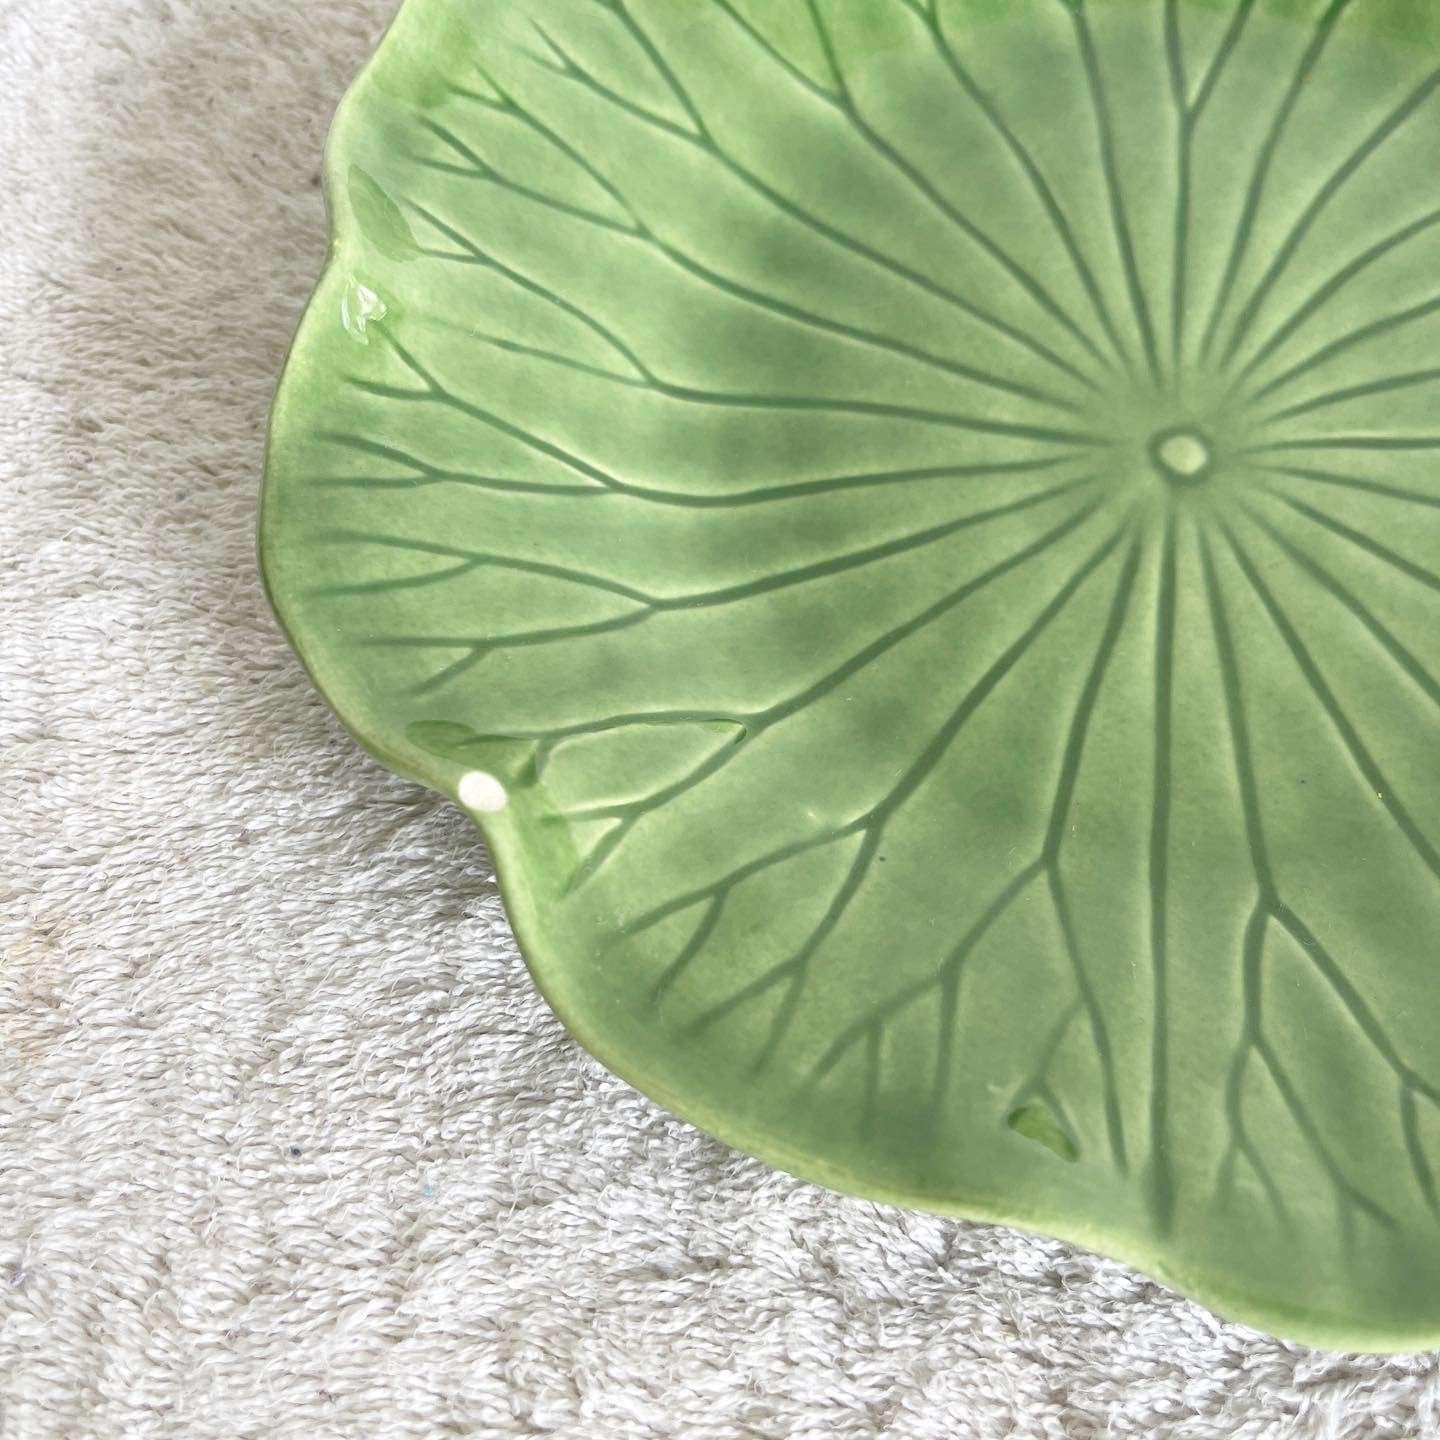 American Green Metlox Poppytrail Lotus Plate - a Pair For Sale